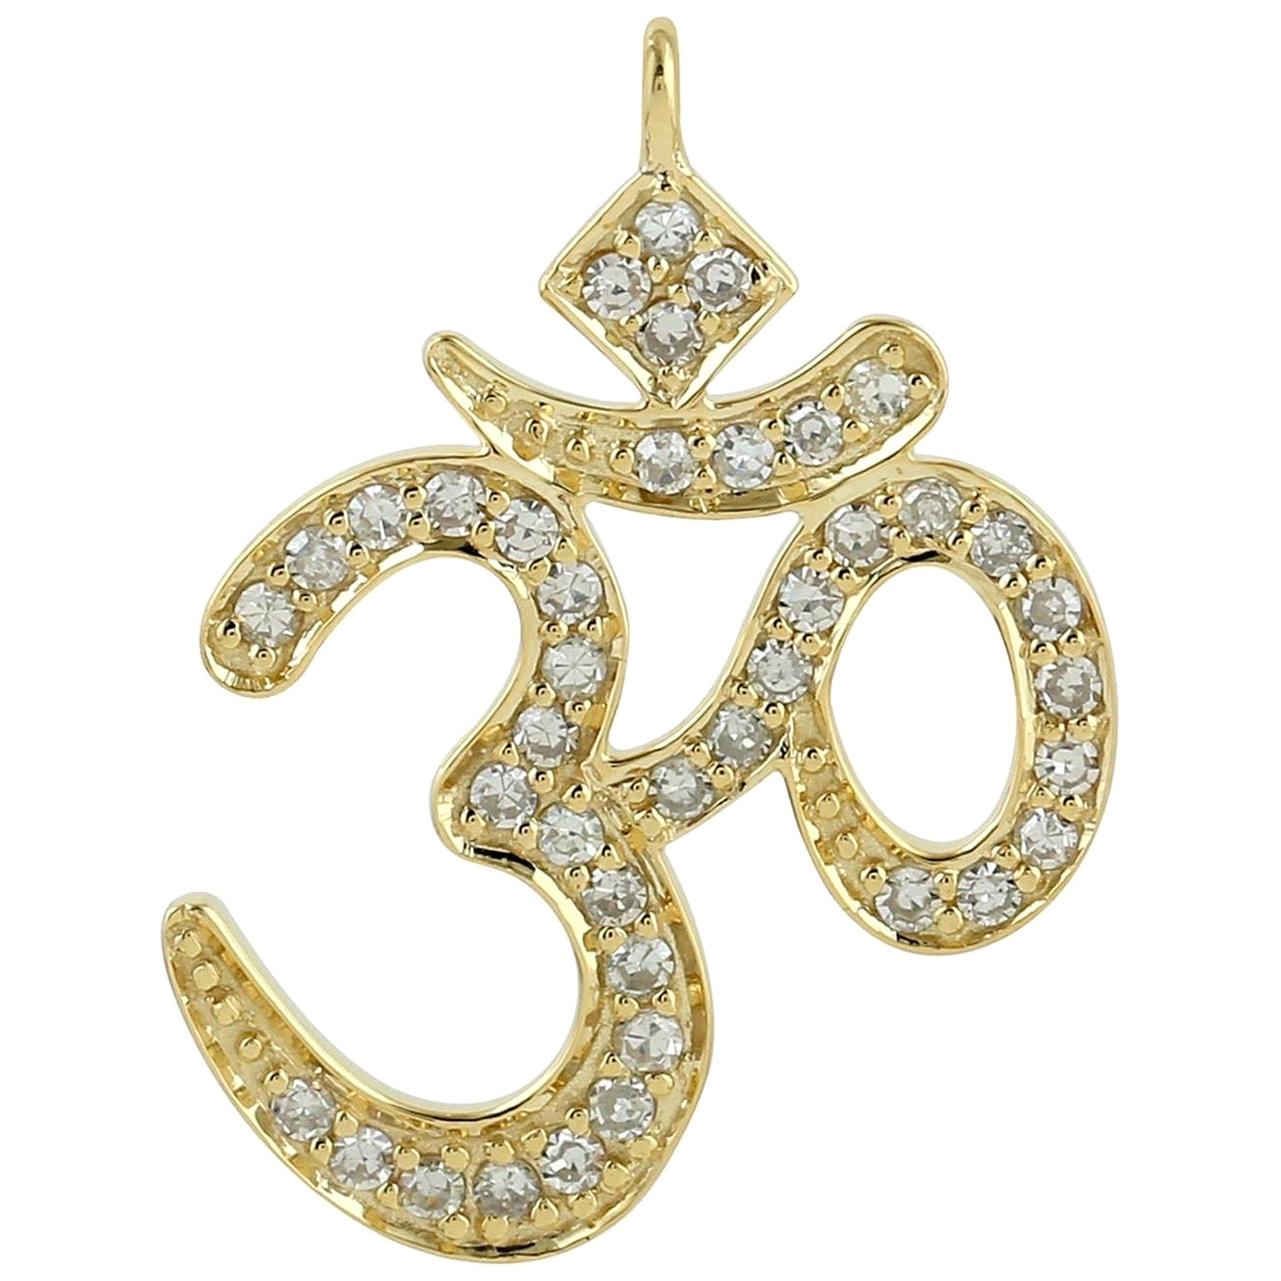 Ohm Spiritual Diamond 18 Karat Gold Pendant Necklace